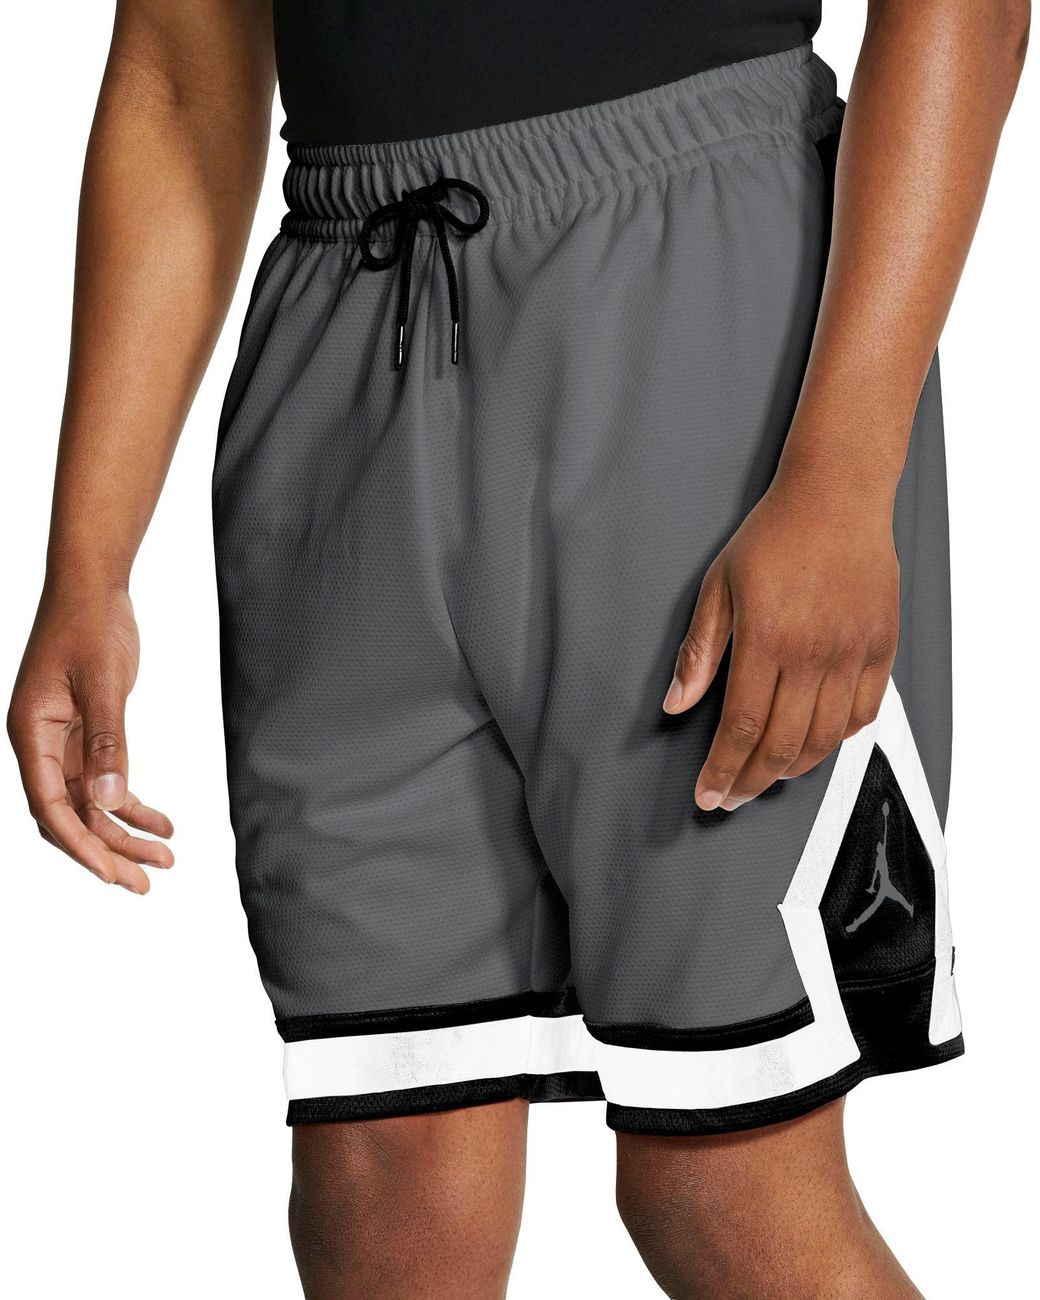 Nike Jumpman Diamond Shorts in Iron Grey (Gray) for Men - Lyst